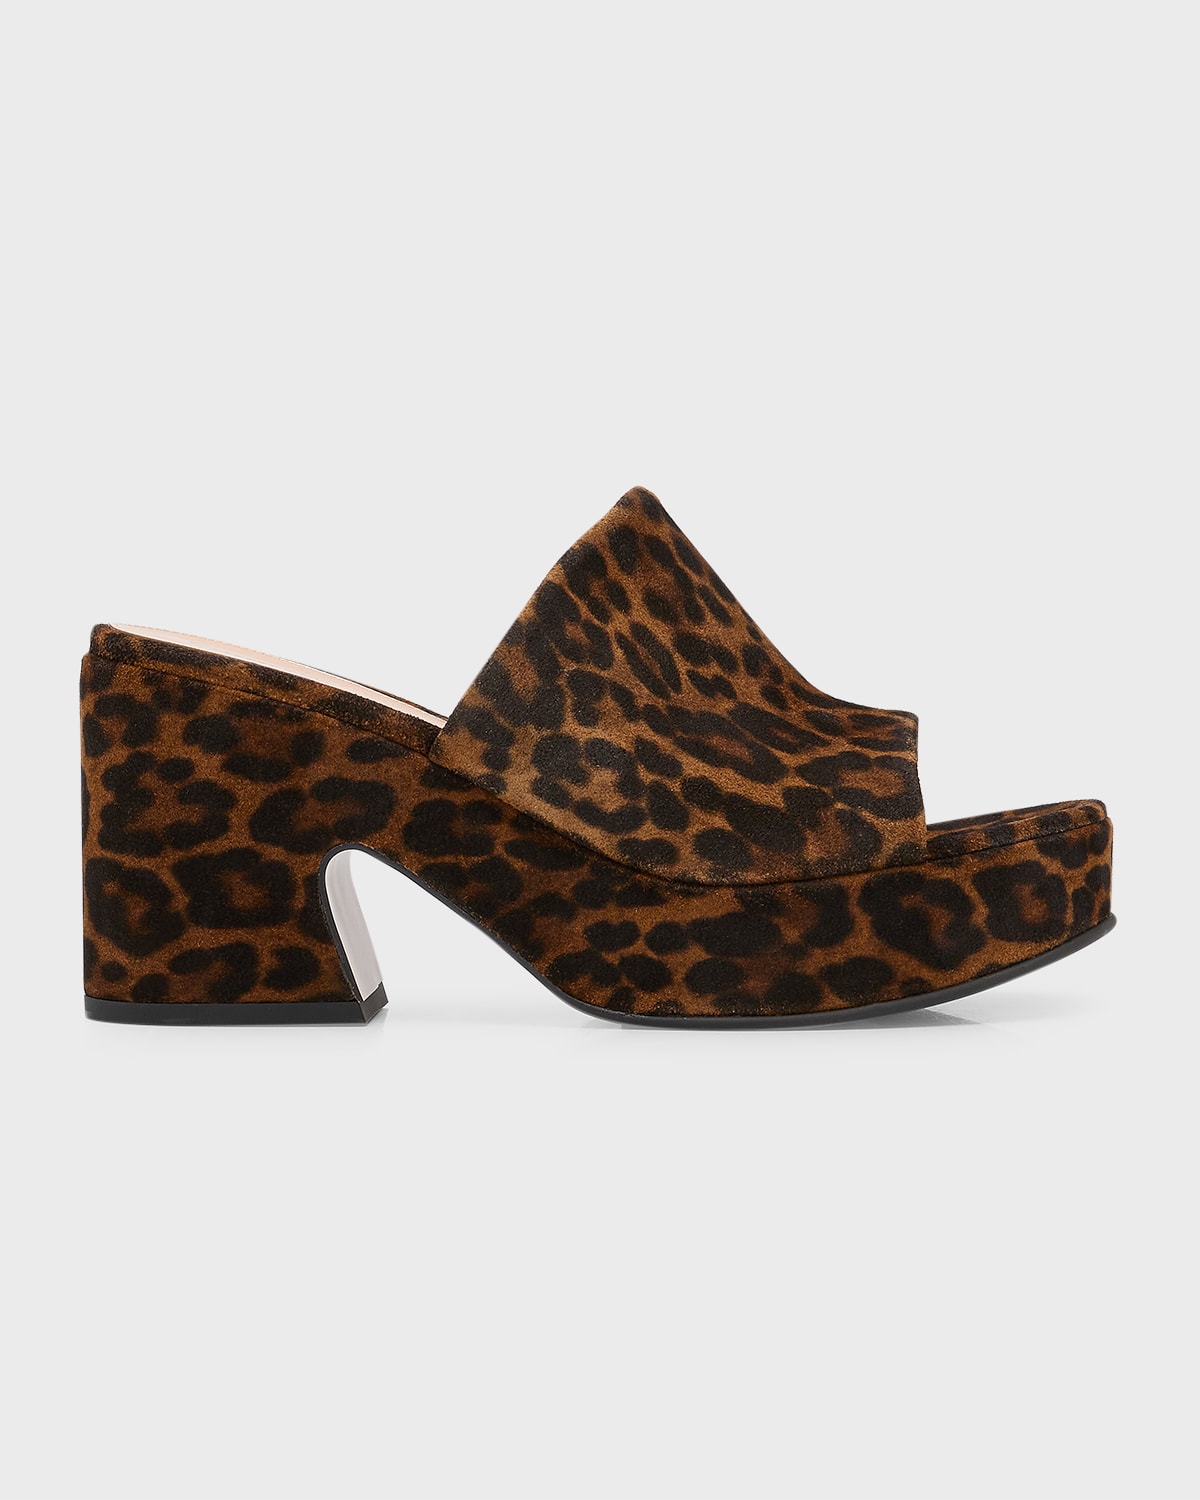 Gianvito Rossi Leopard Suede Platform Mule Sandals In Leopard Print